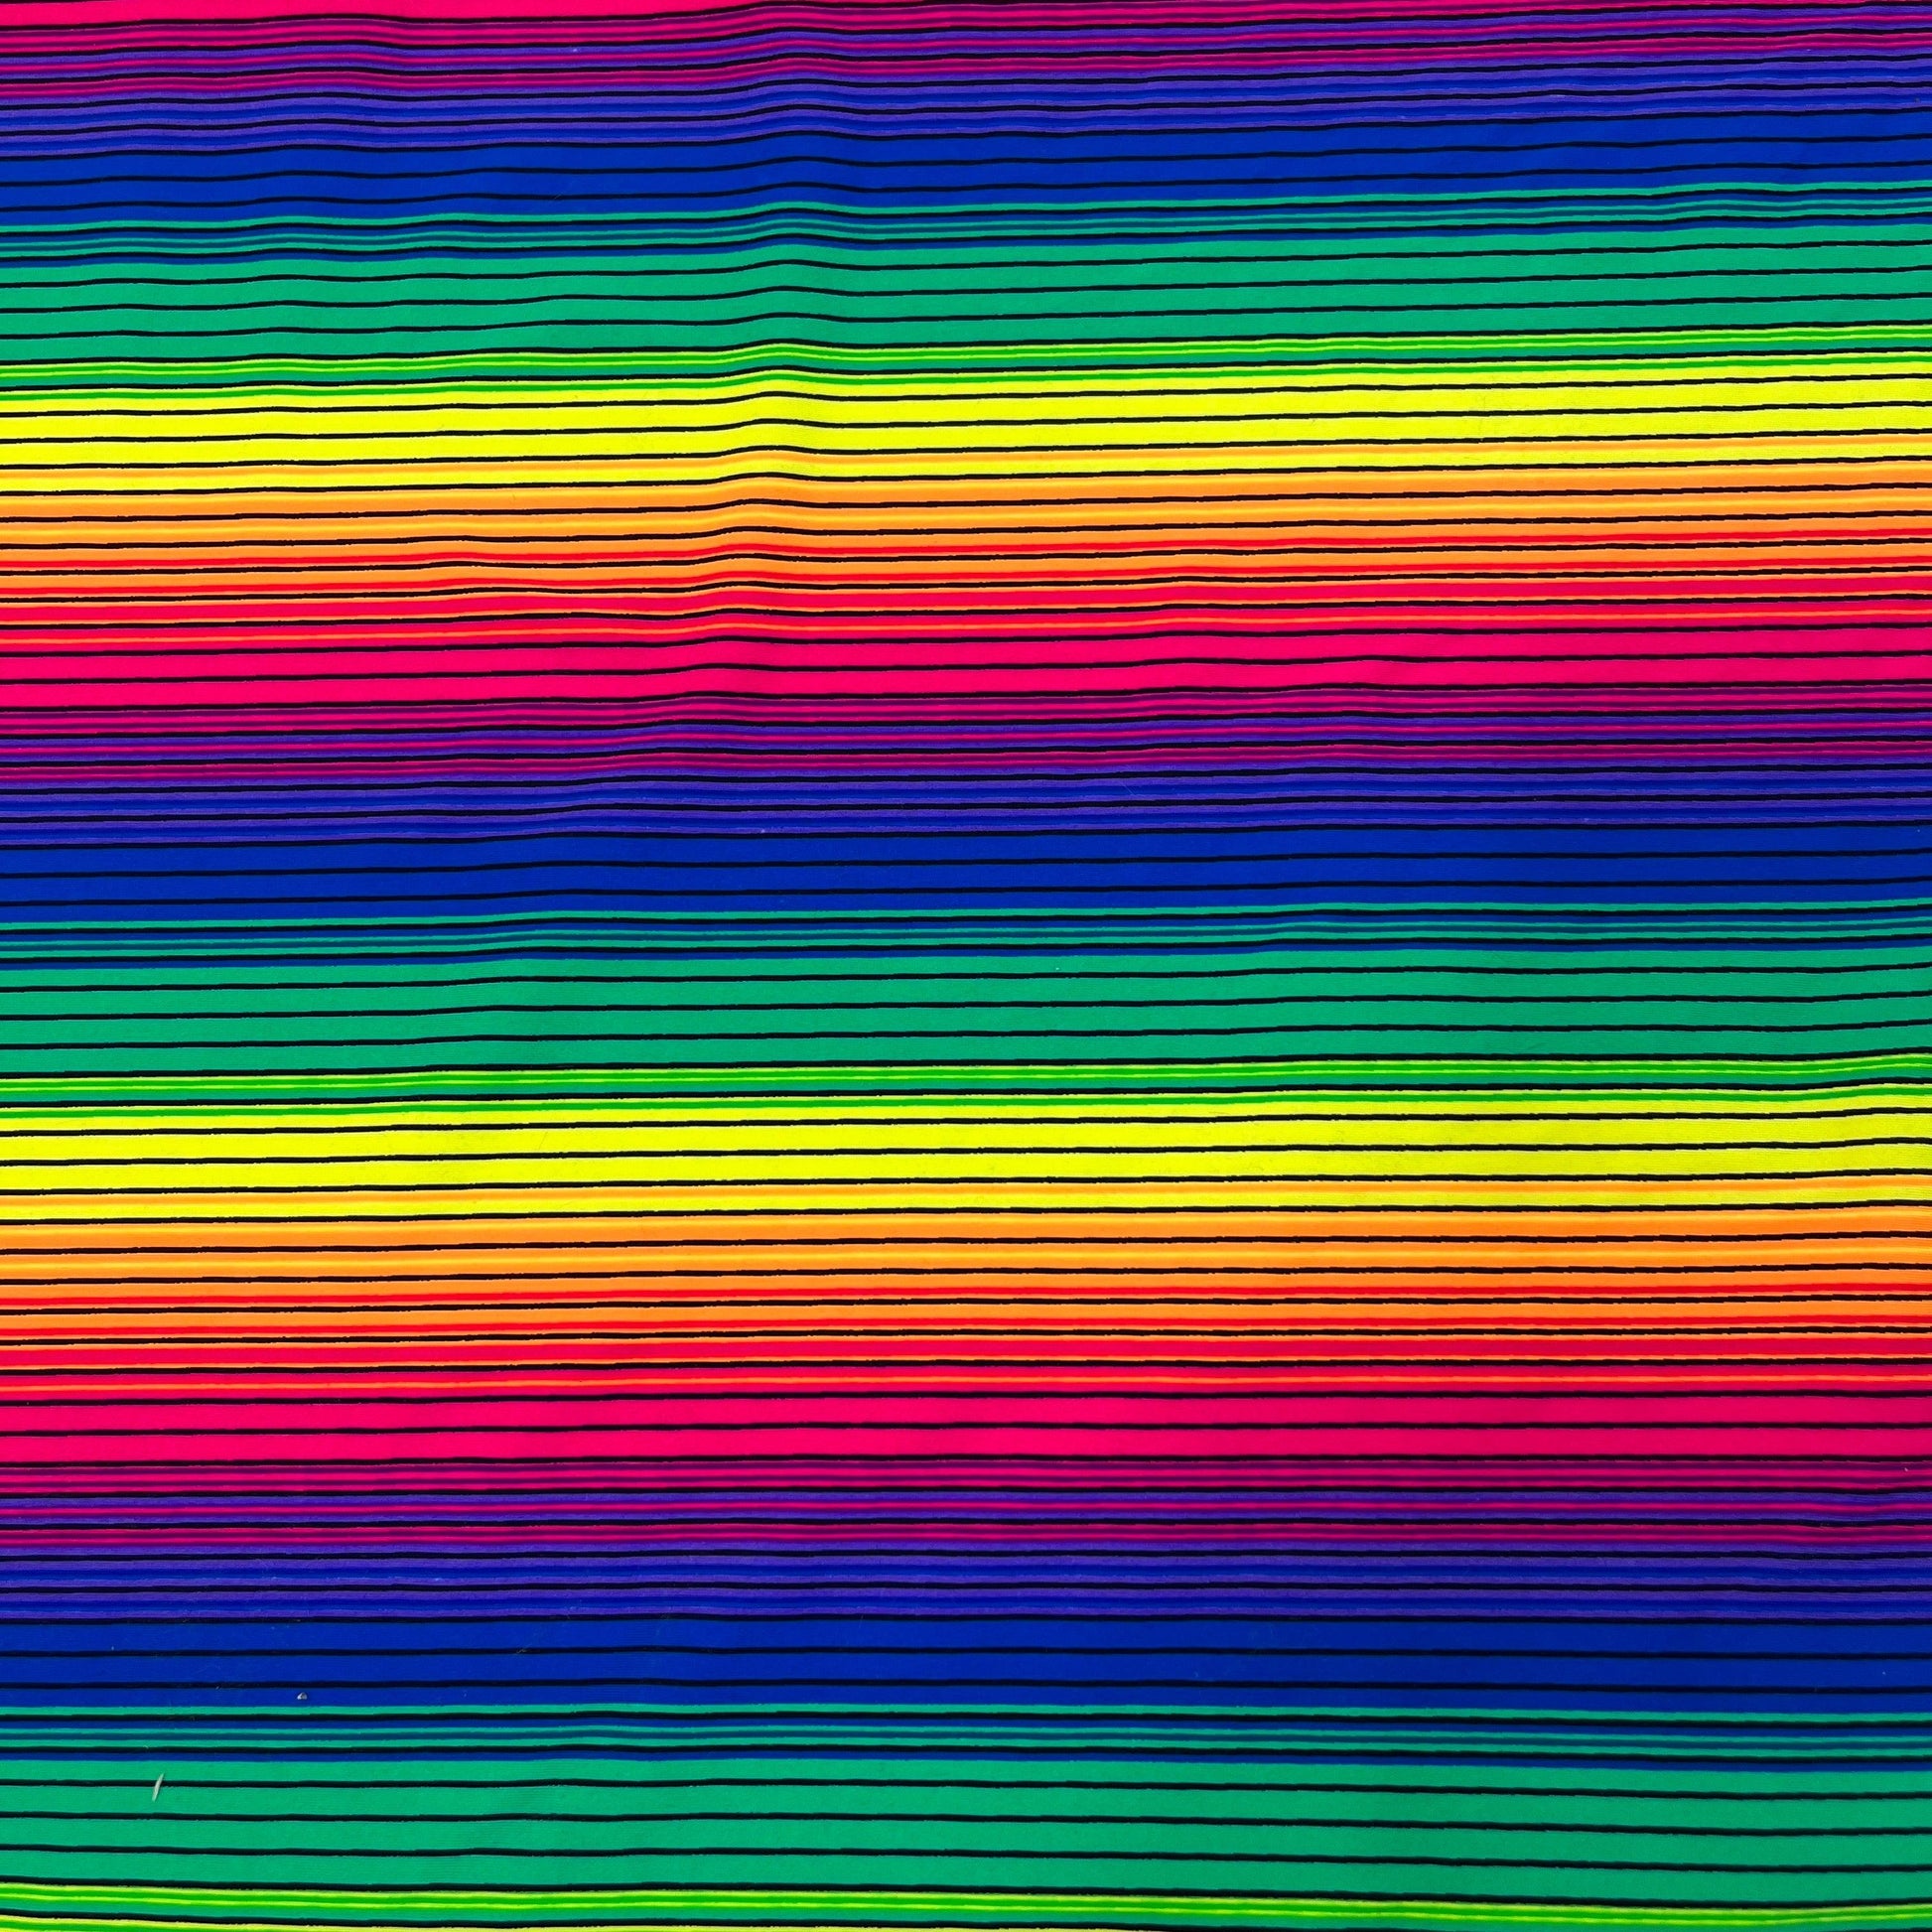 Rainbow on Athletic Jersey Fabric - Nature's Fabrics